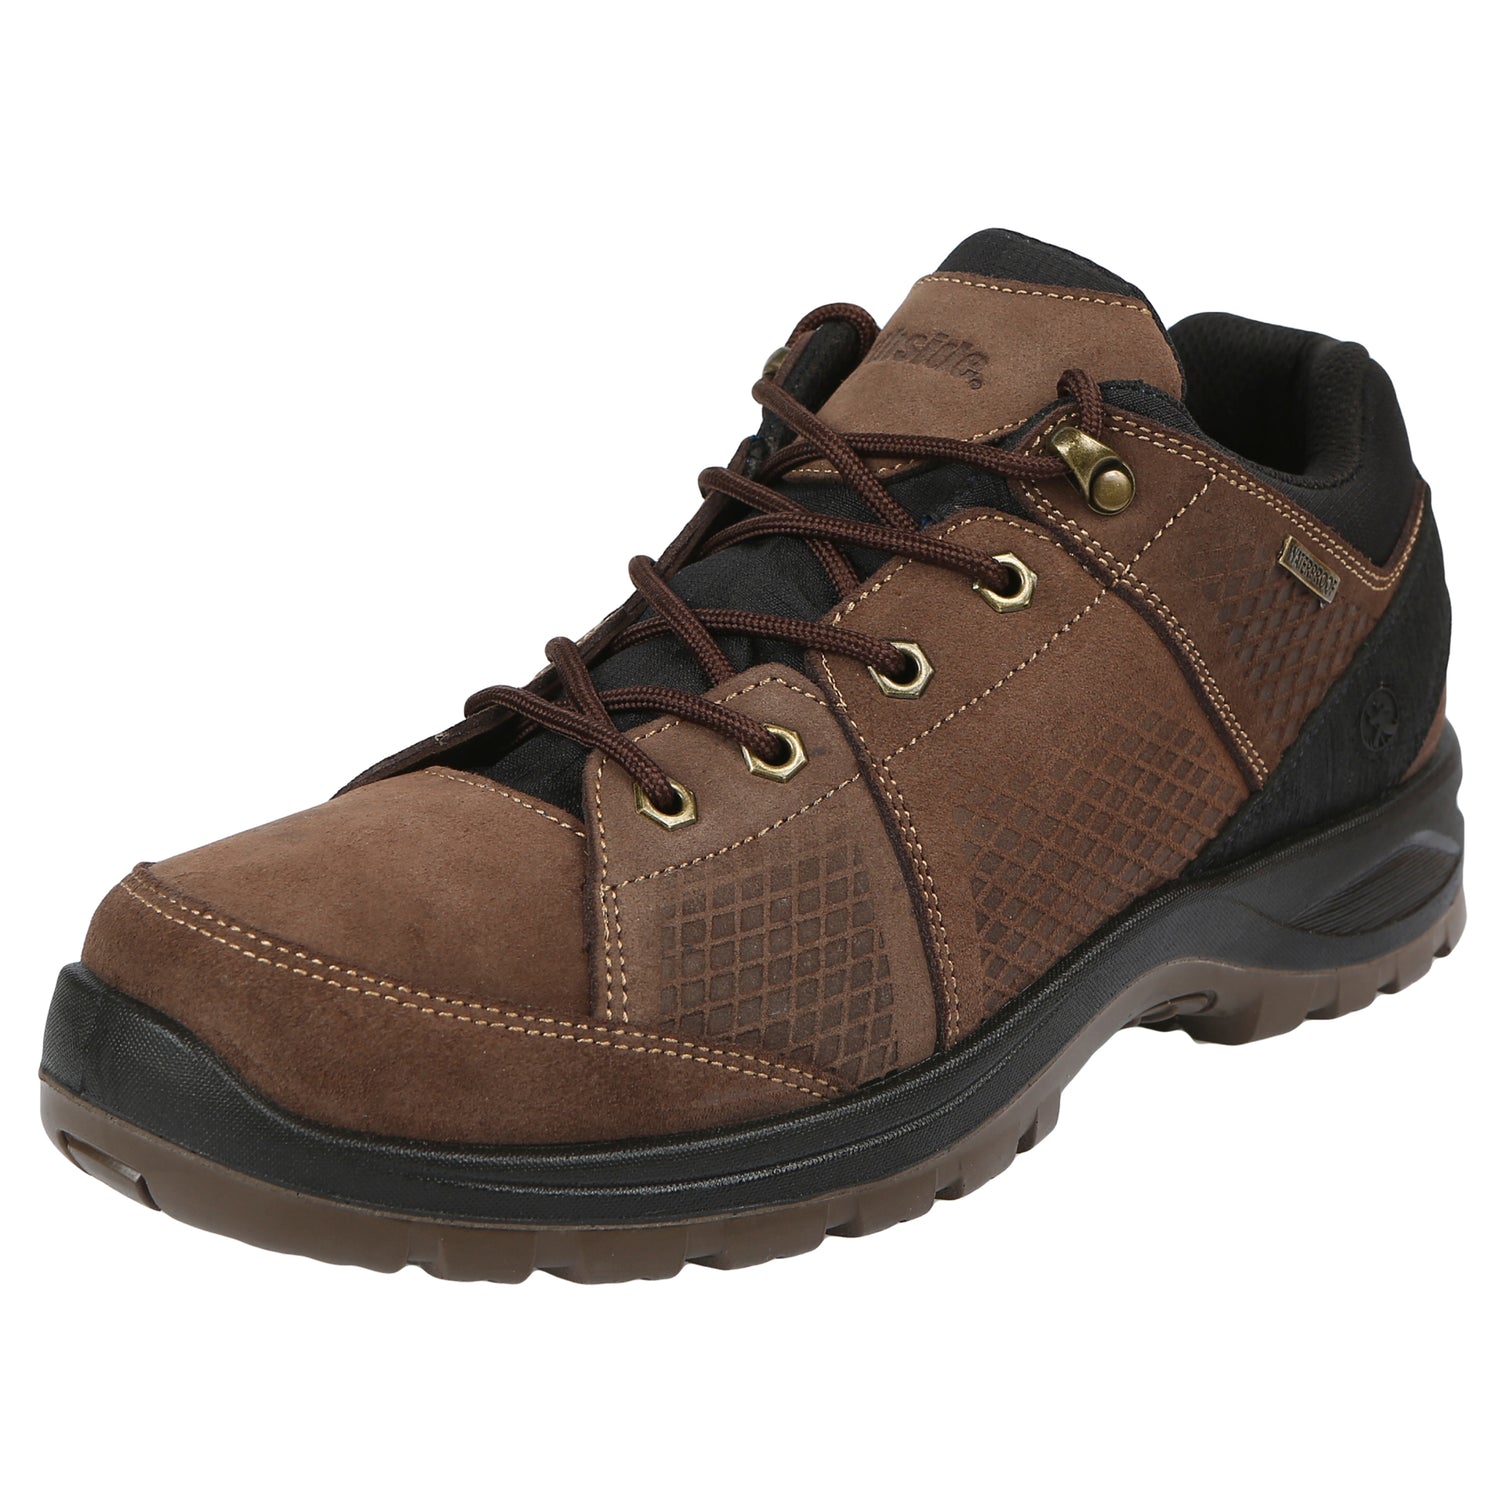 Northside Men's Rockford Waterproof Leather Hiking Shoes